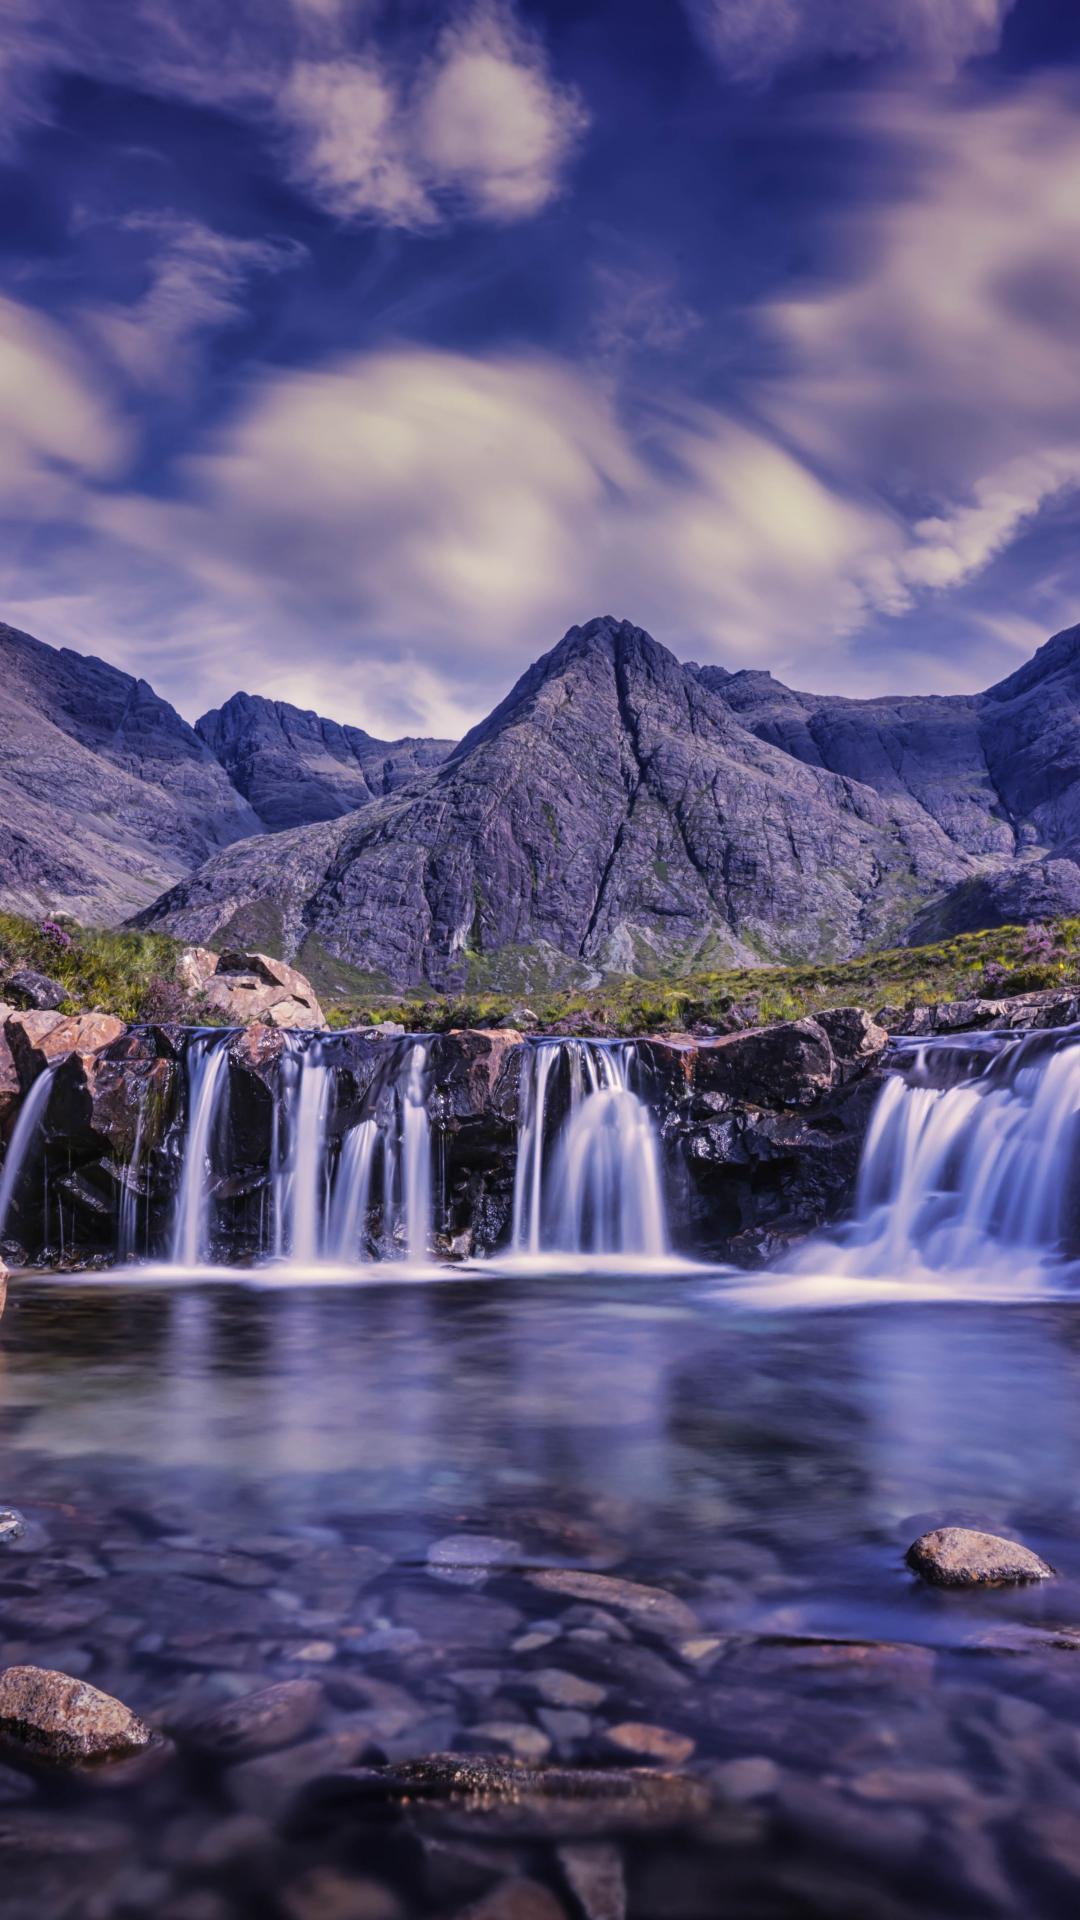 Mountain, Waterfall, Water iPhone Wallpaper iDrop News